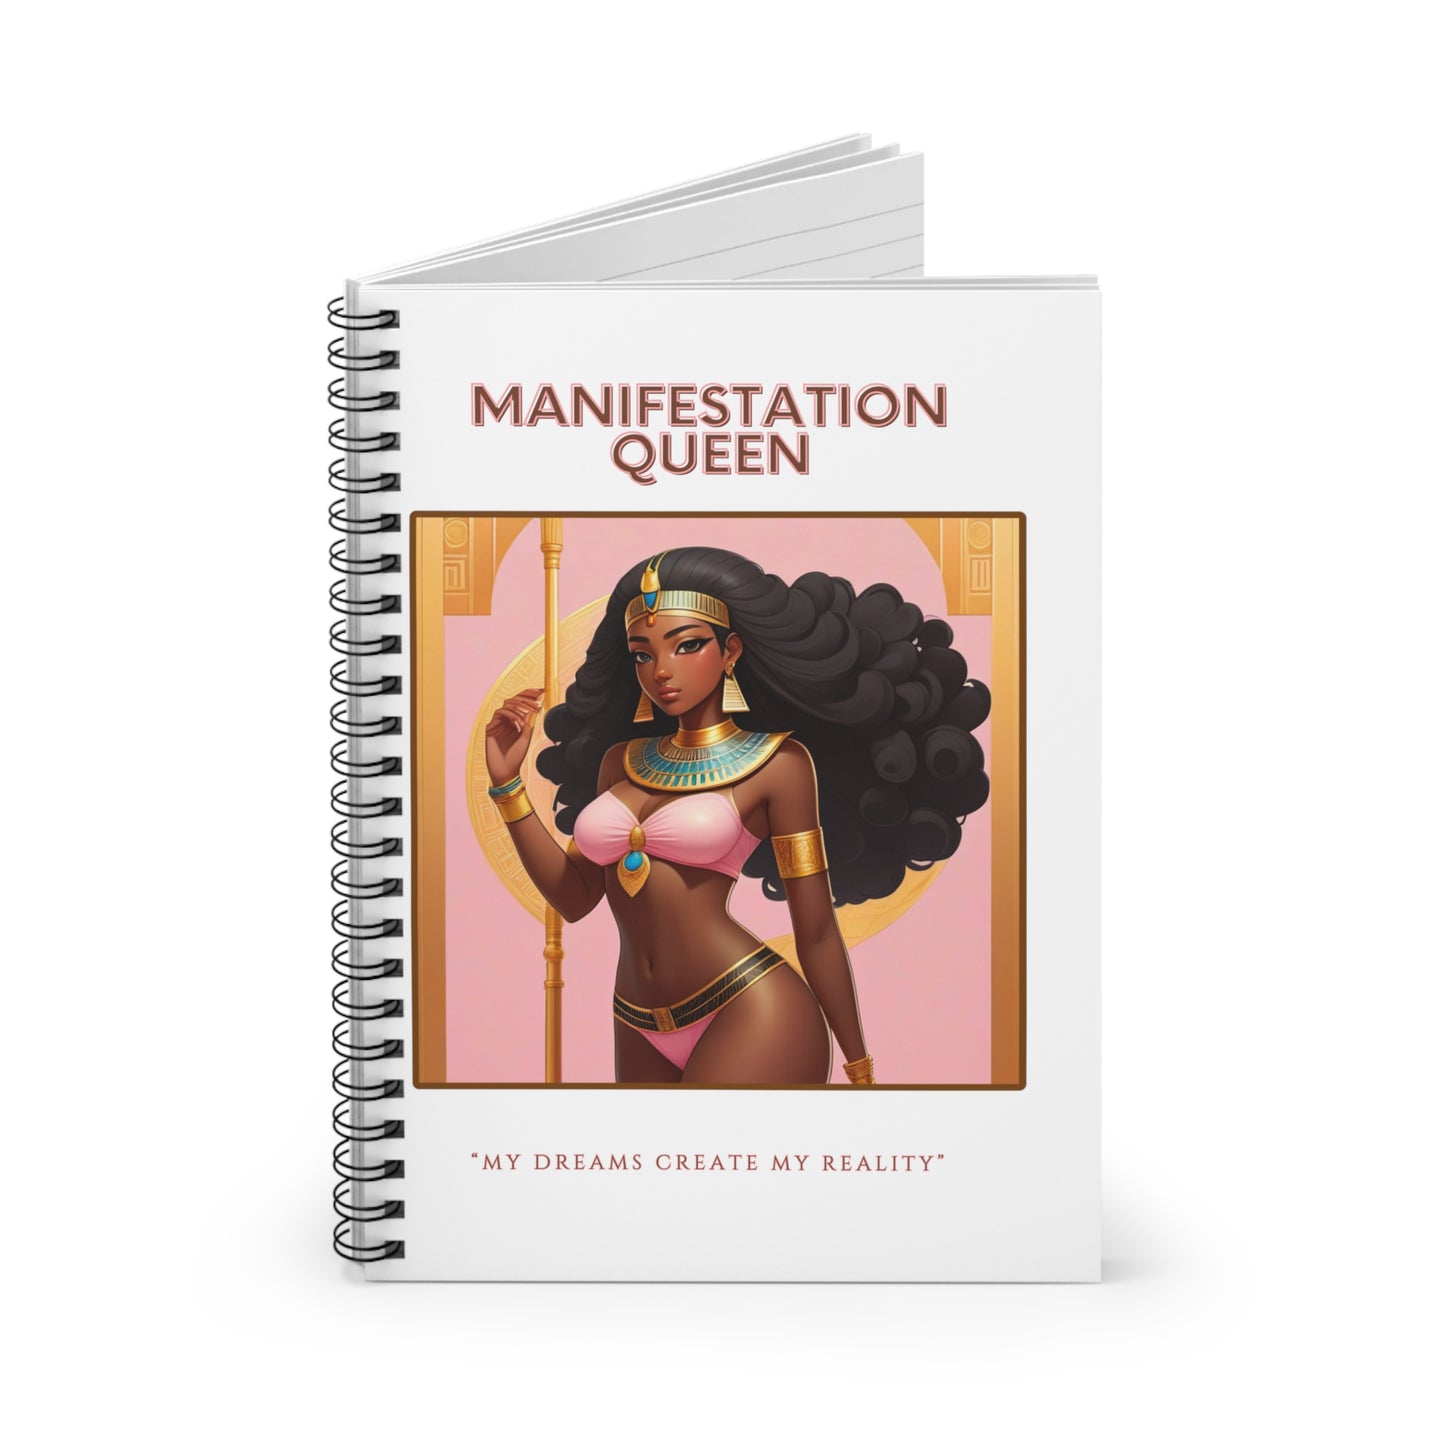 "Manifestation Queen" Spiral Notebook - Ruled Line